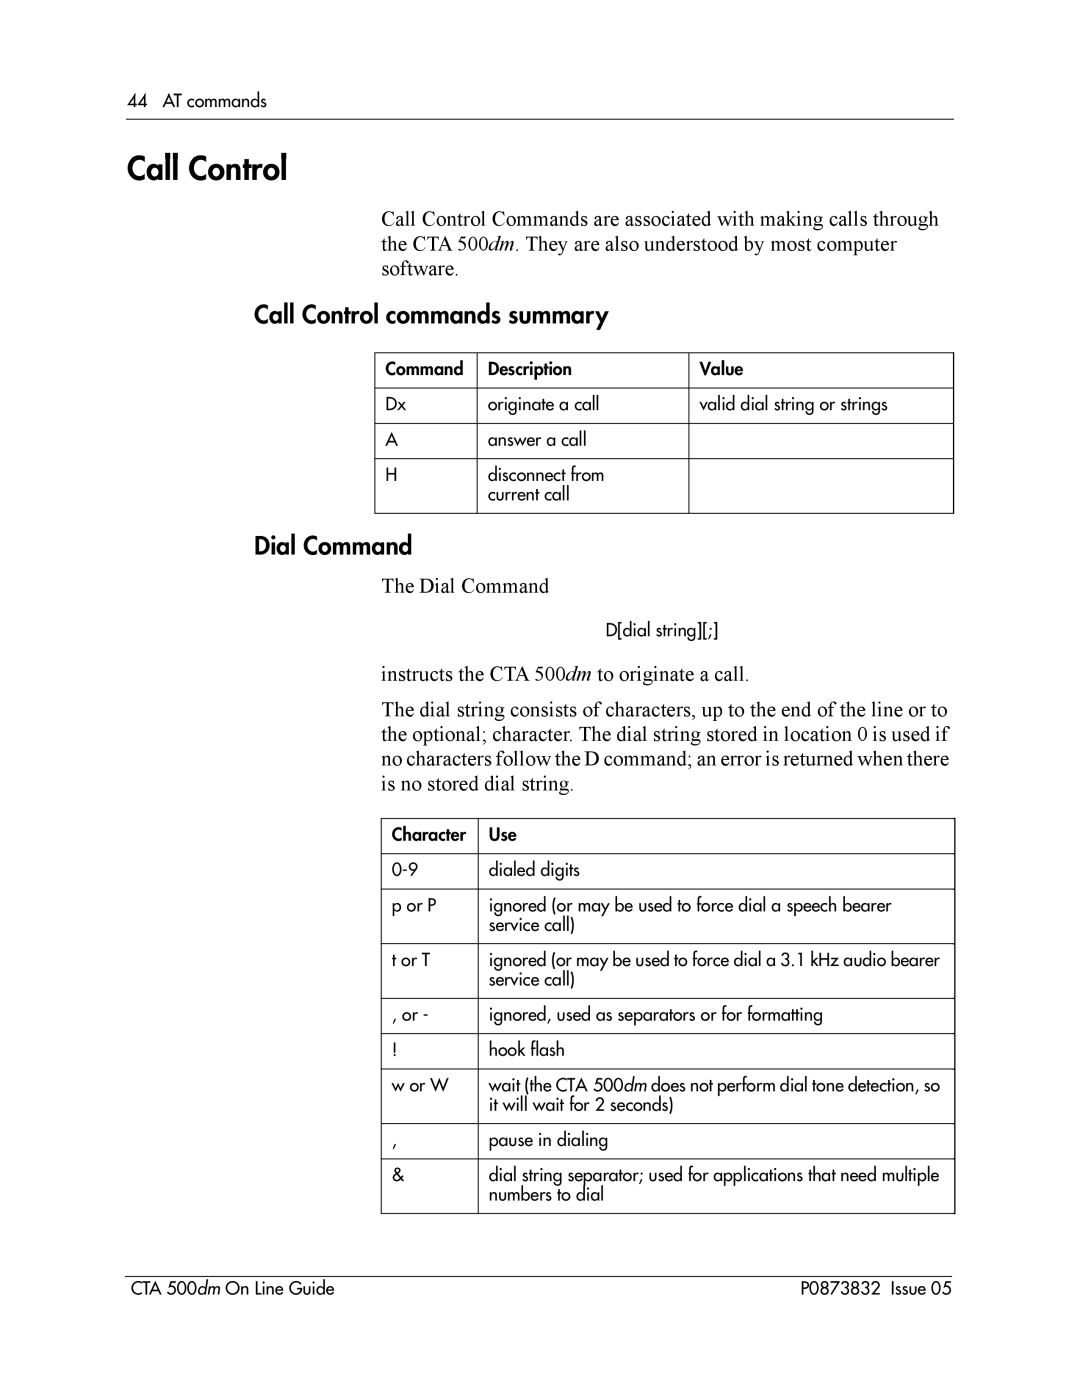 Nortel Networks CTA 500dm manual Call Control commands summary, Dial Command 